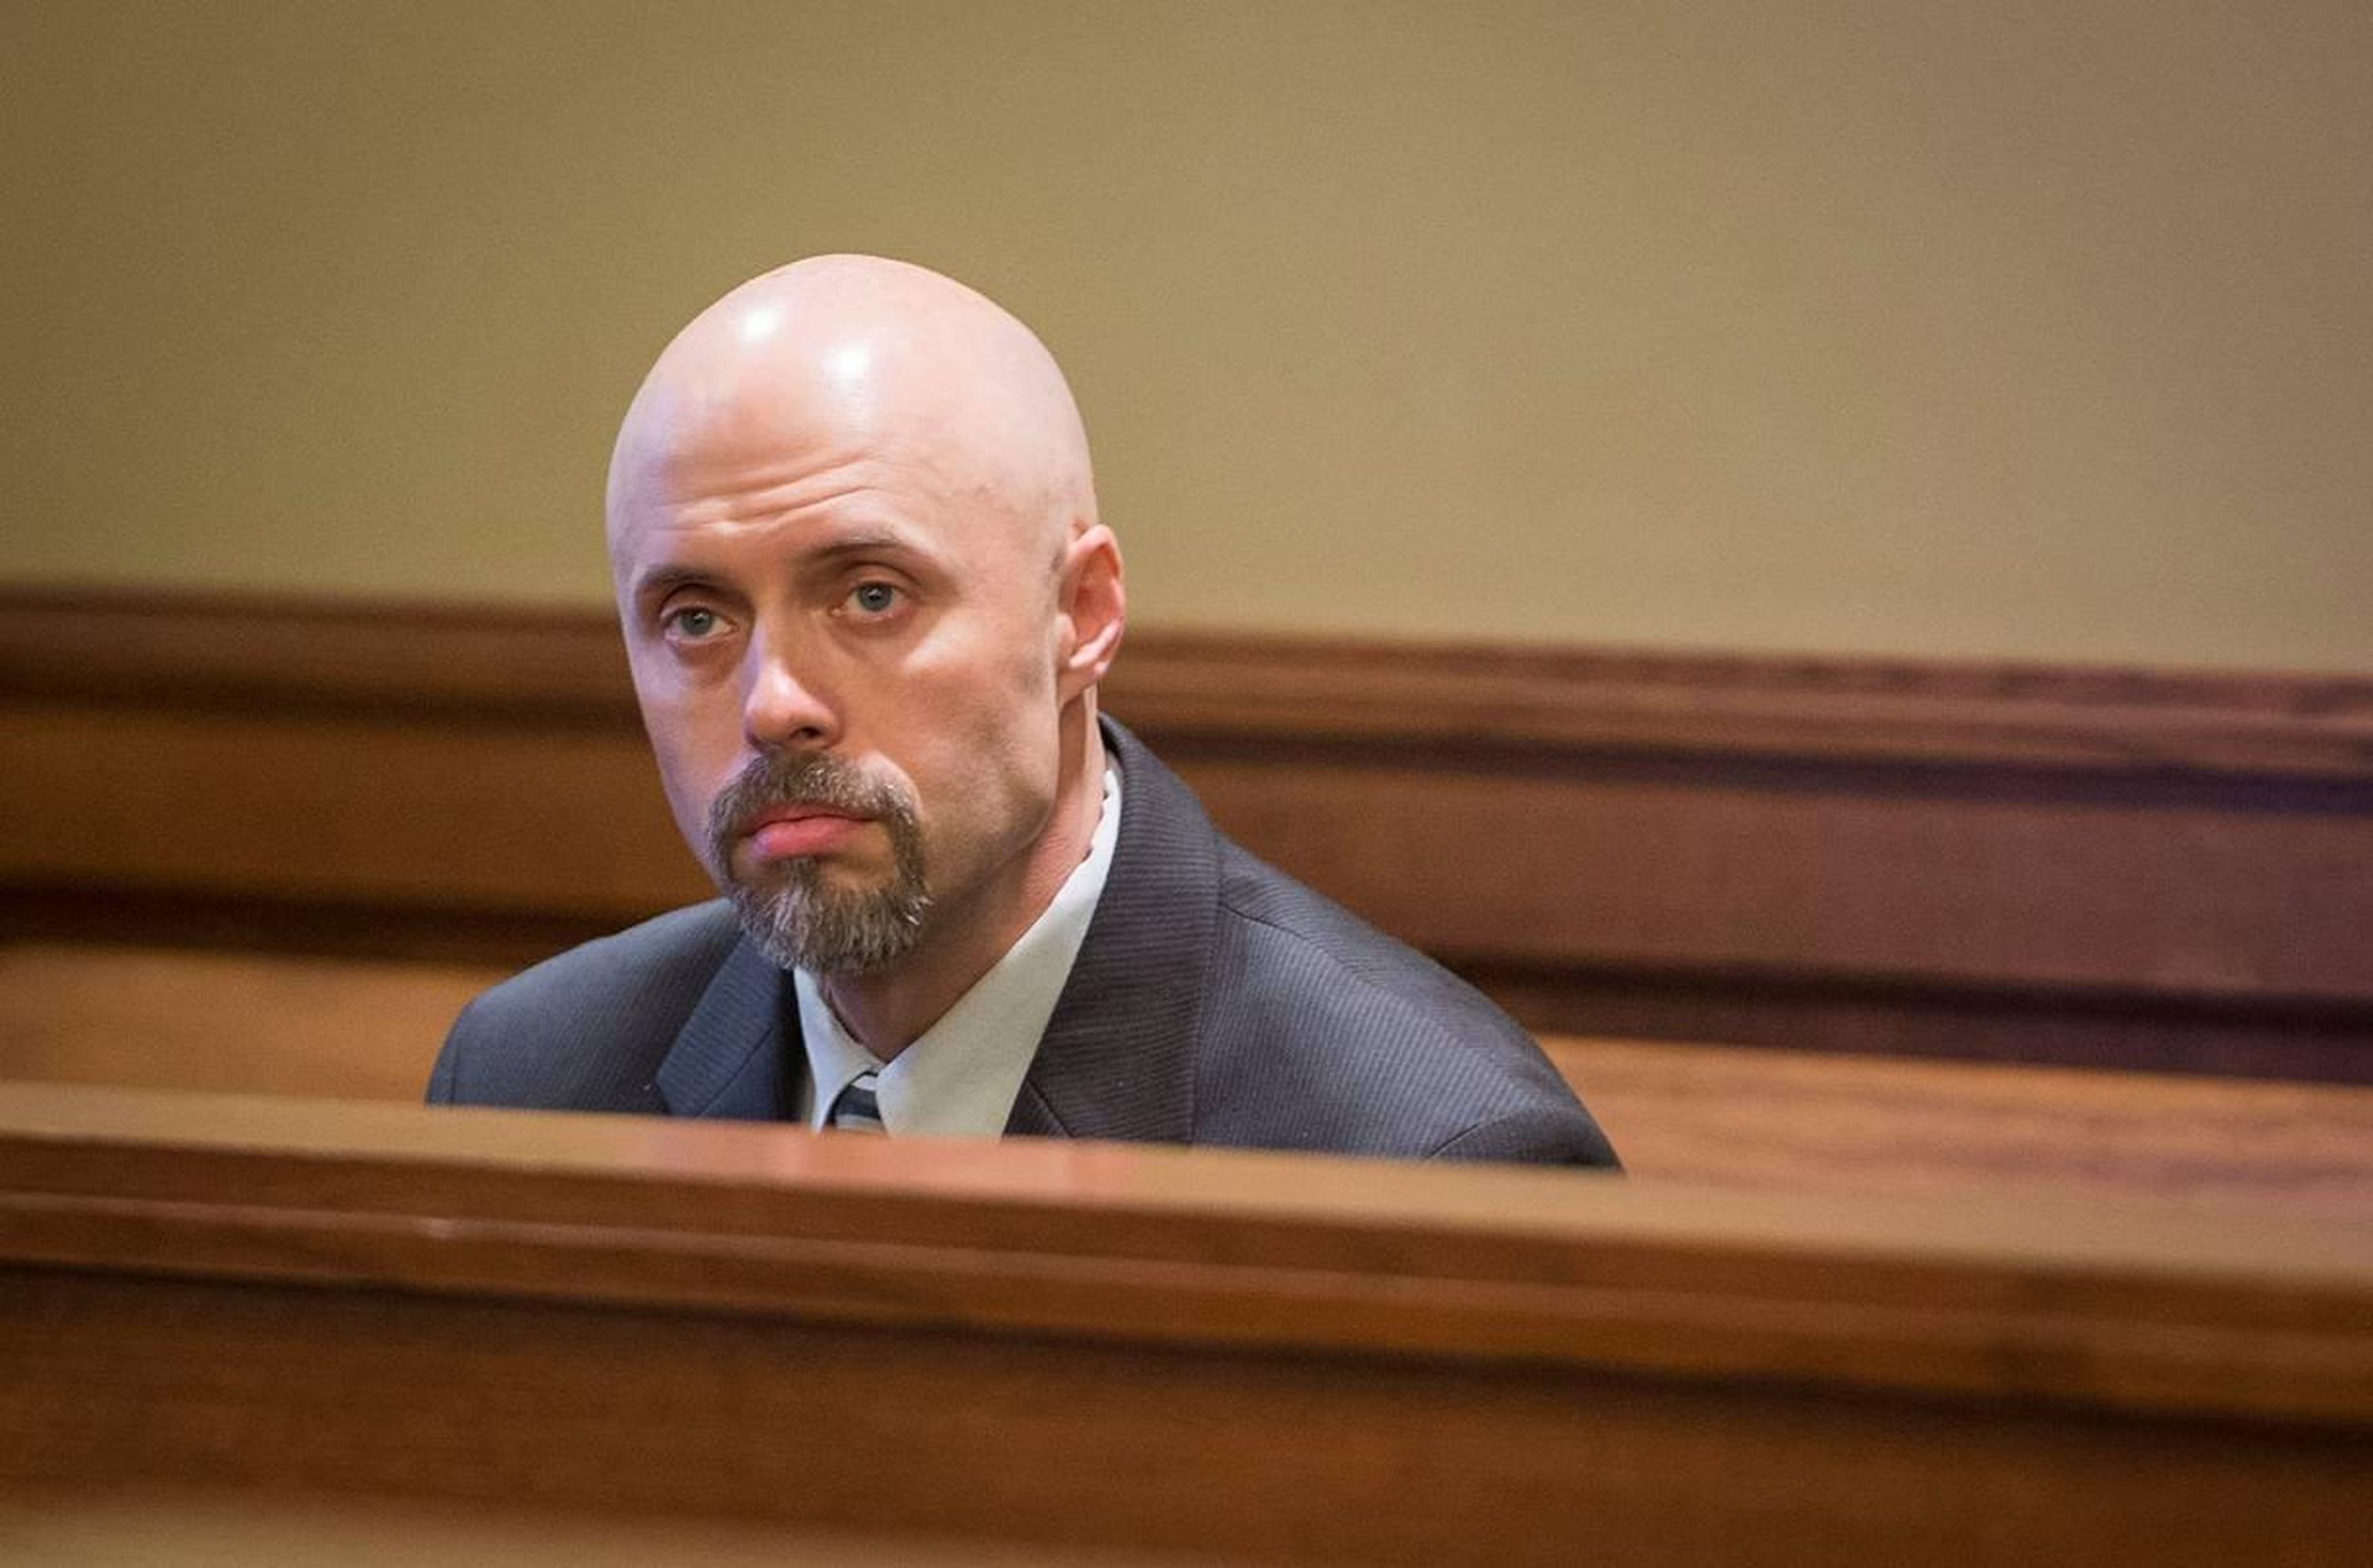 Judge Declares Mistrial In Sex Assault Case Against Former Spokane Police Officer The